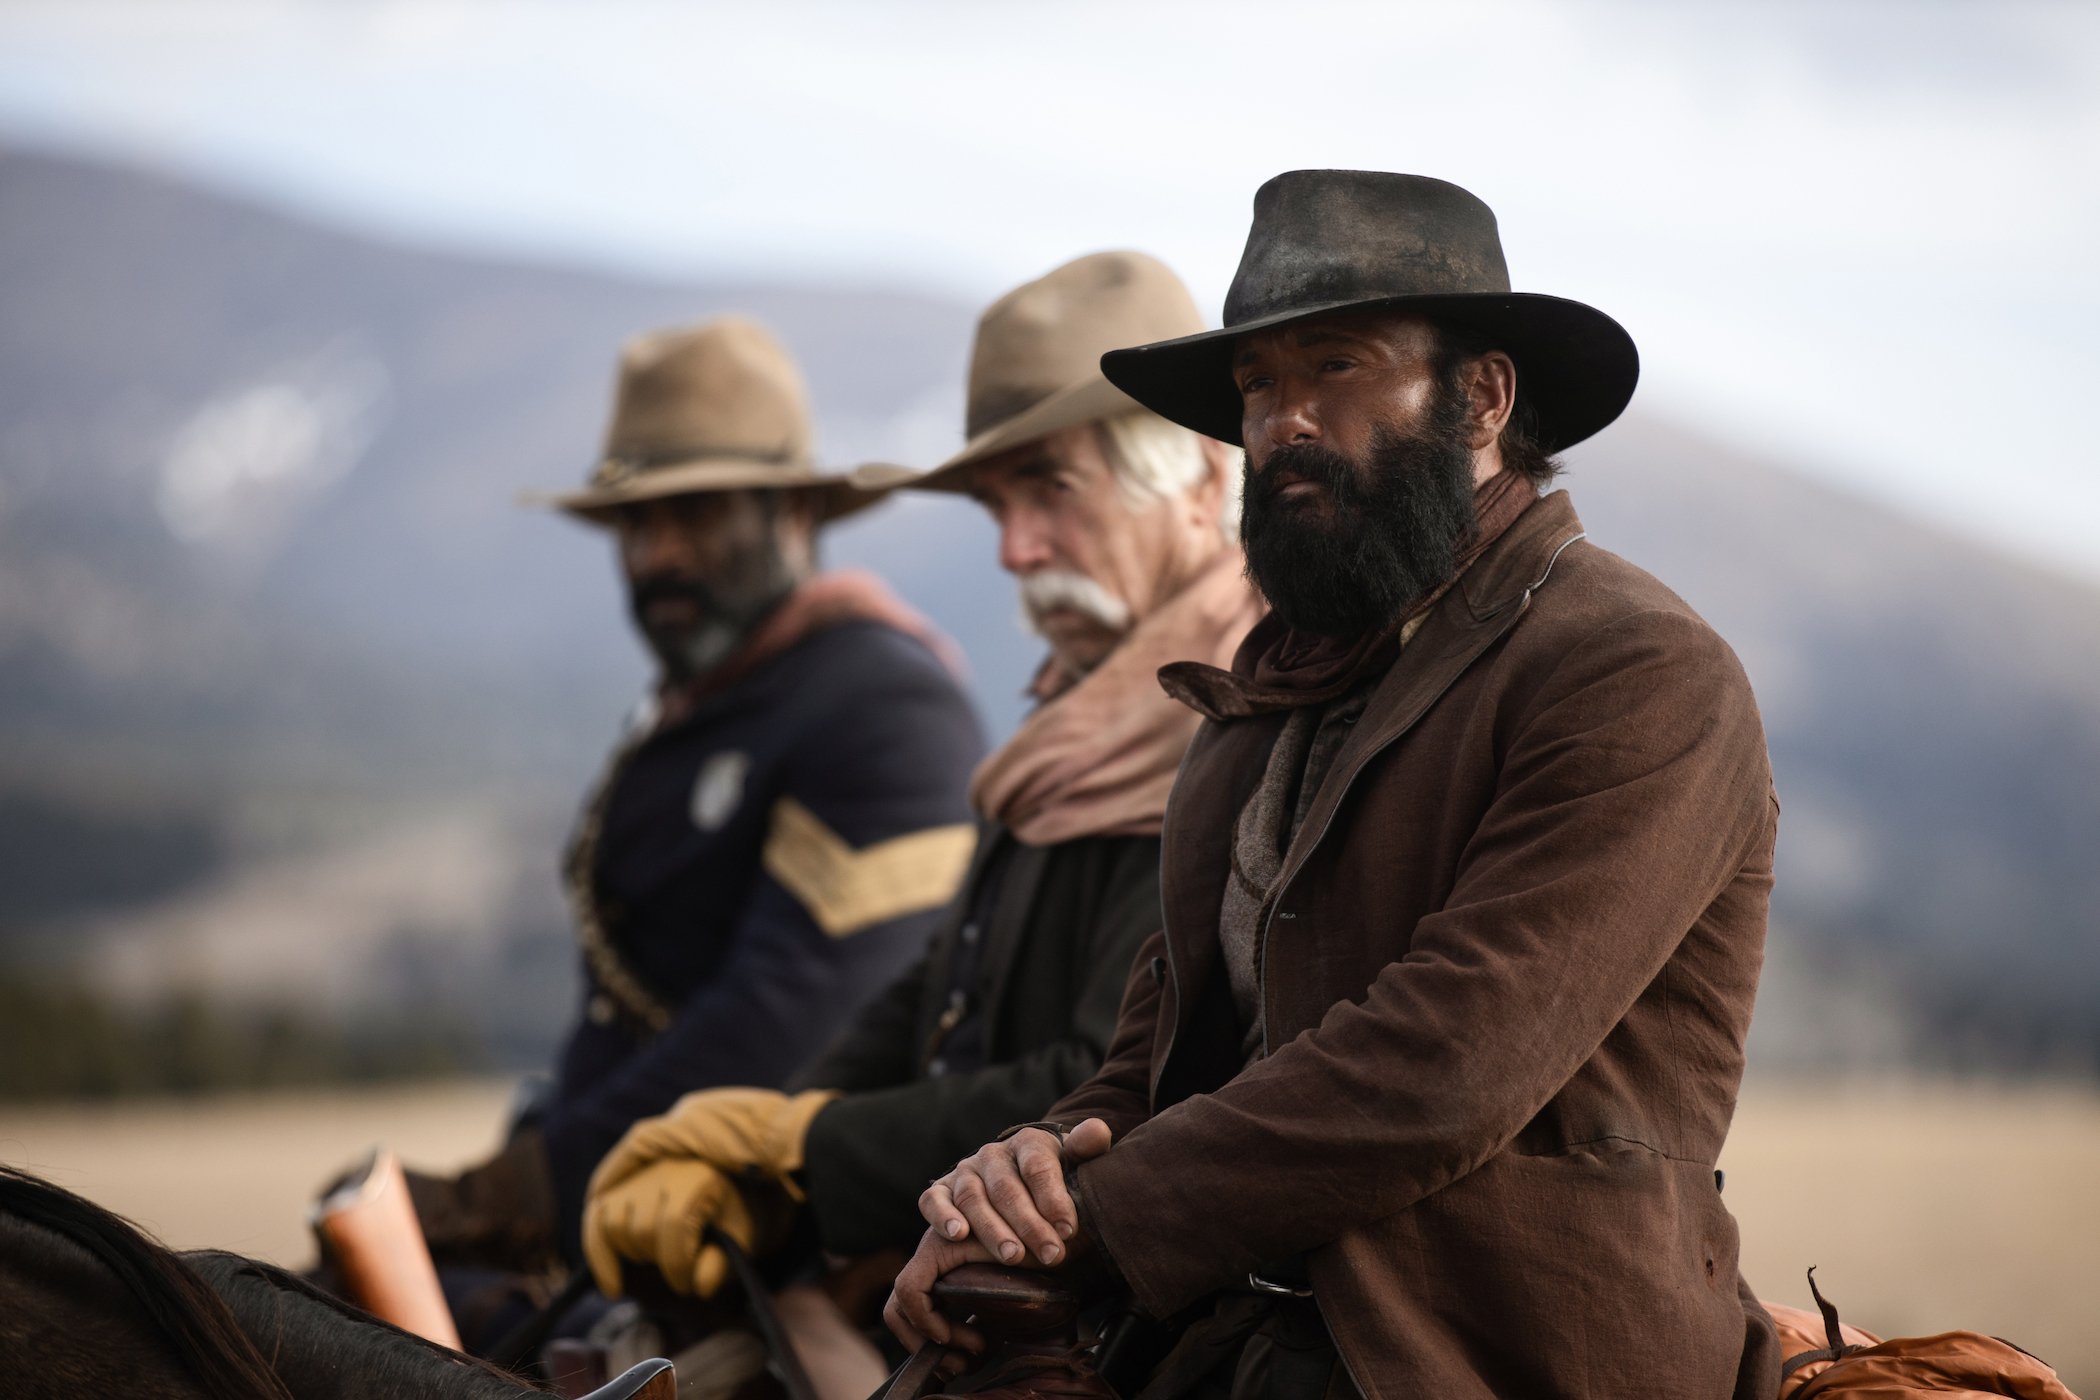 Tim McGraw as James Dutton, Sam Elliott as Shea, and LaMonica Garrett as Thomas sitting on horses in '1883' episode 9